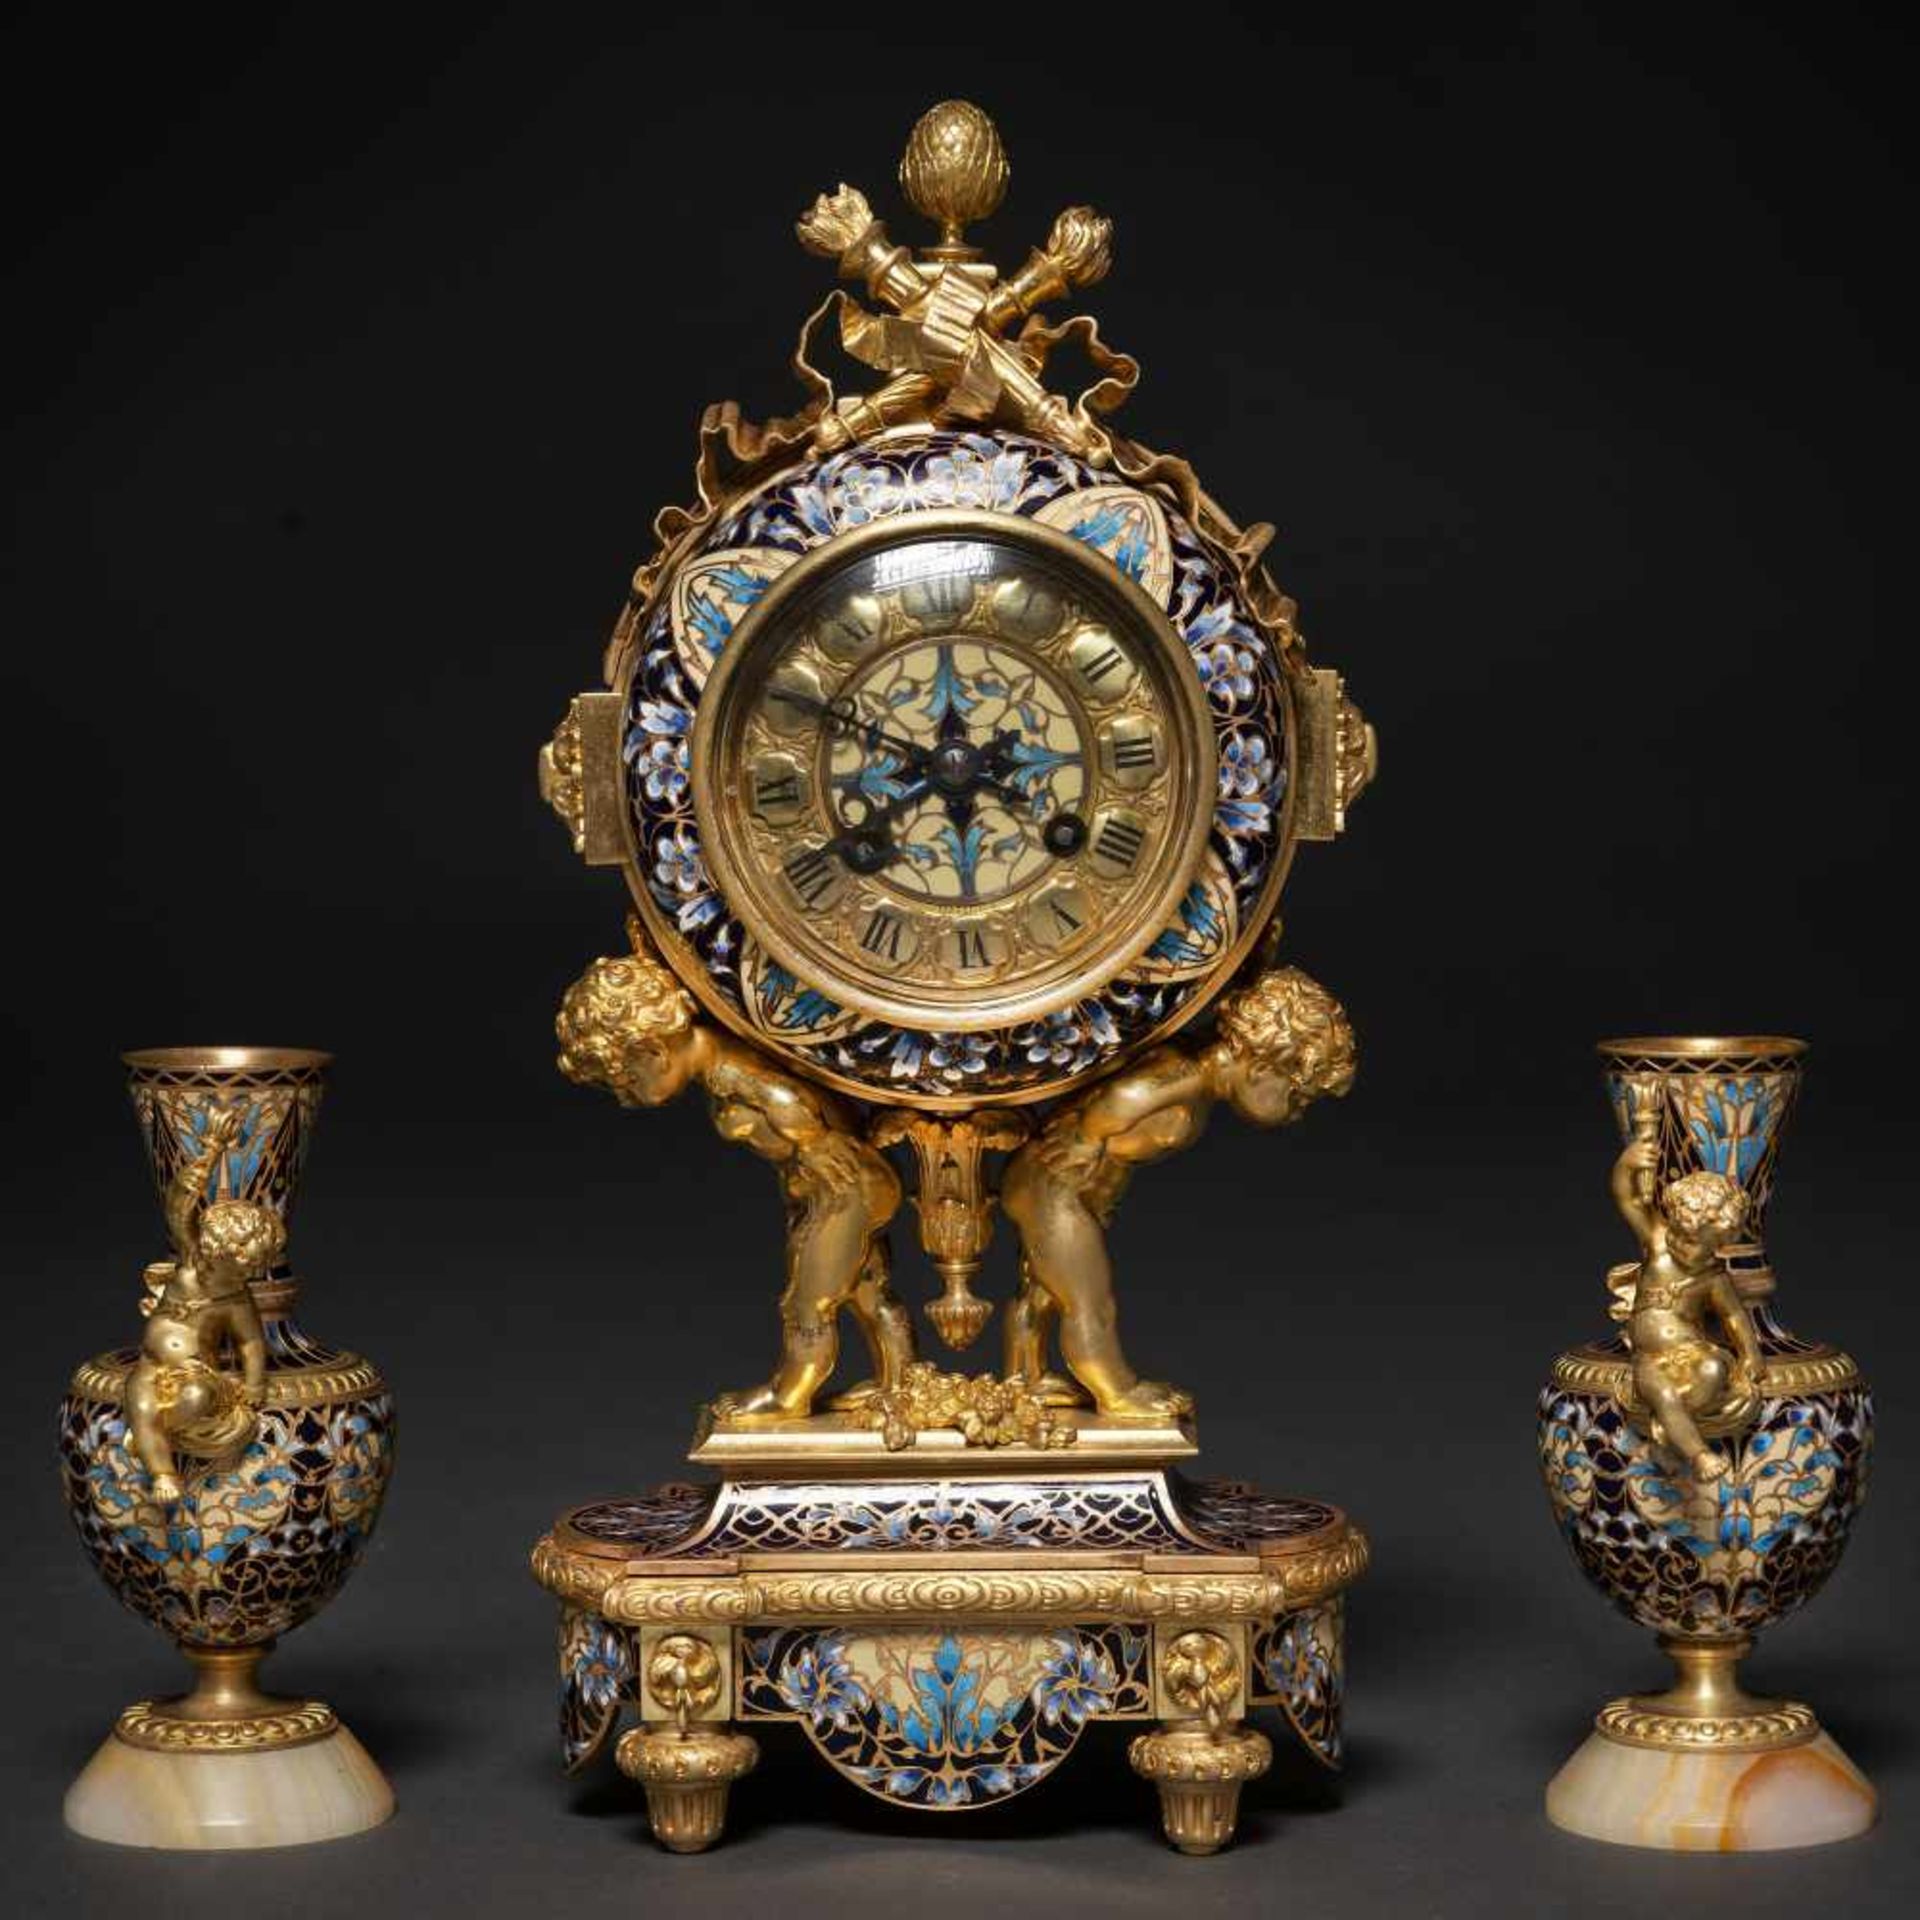 Oudin-Marseille Reloj de sobremesa francés con guarnición de copas estilo Louis XVI en bronce dorado